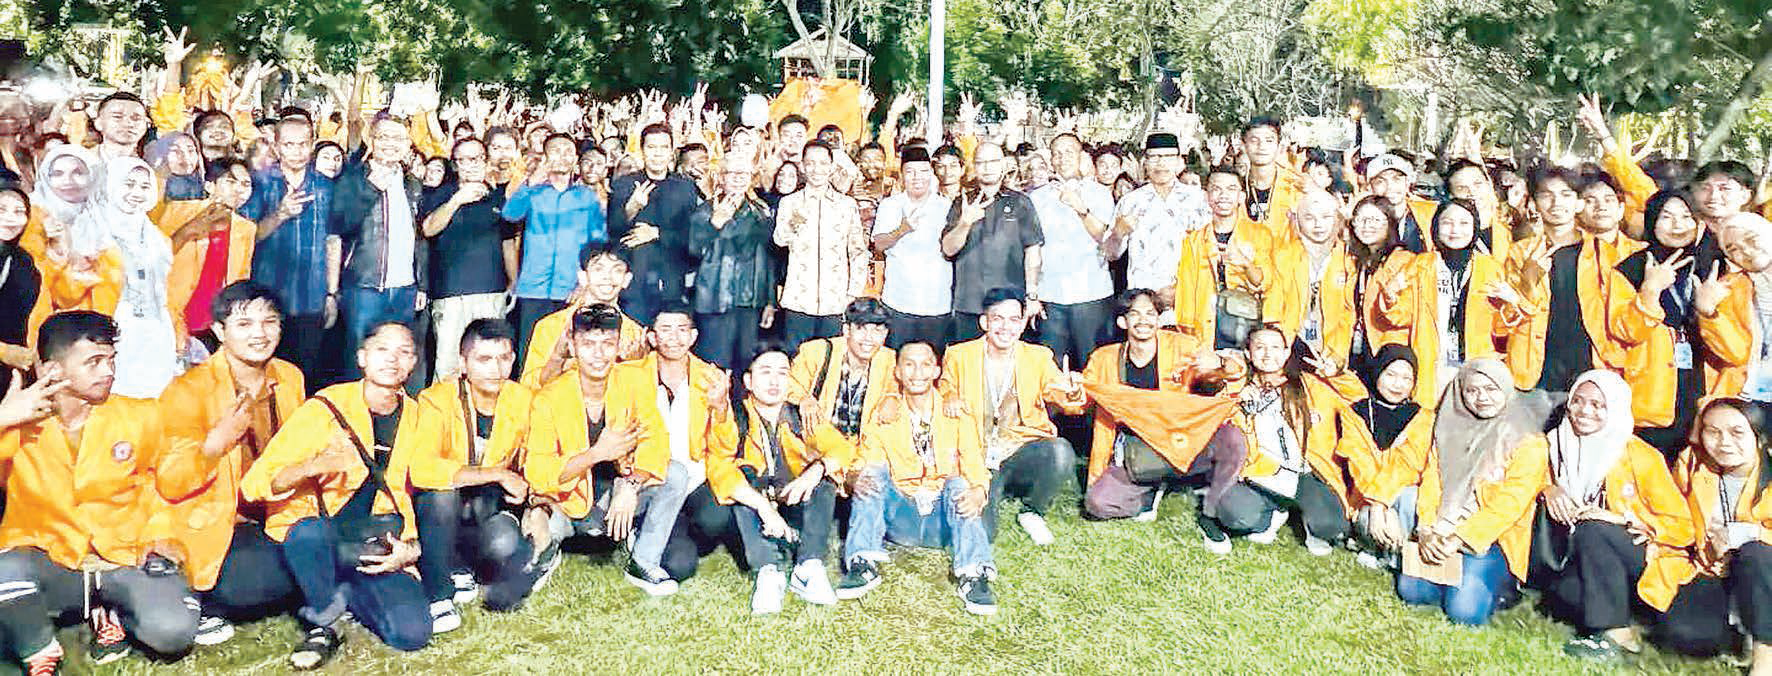 Bupati Wakatobi Haliana bersama mahasiswa KKN dan dosen pembimbing disambut di pelataran Kantor Bupati.